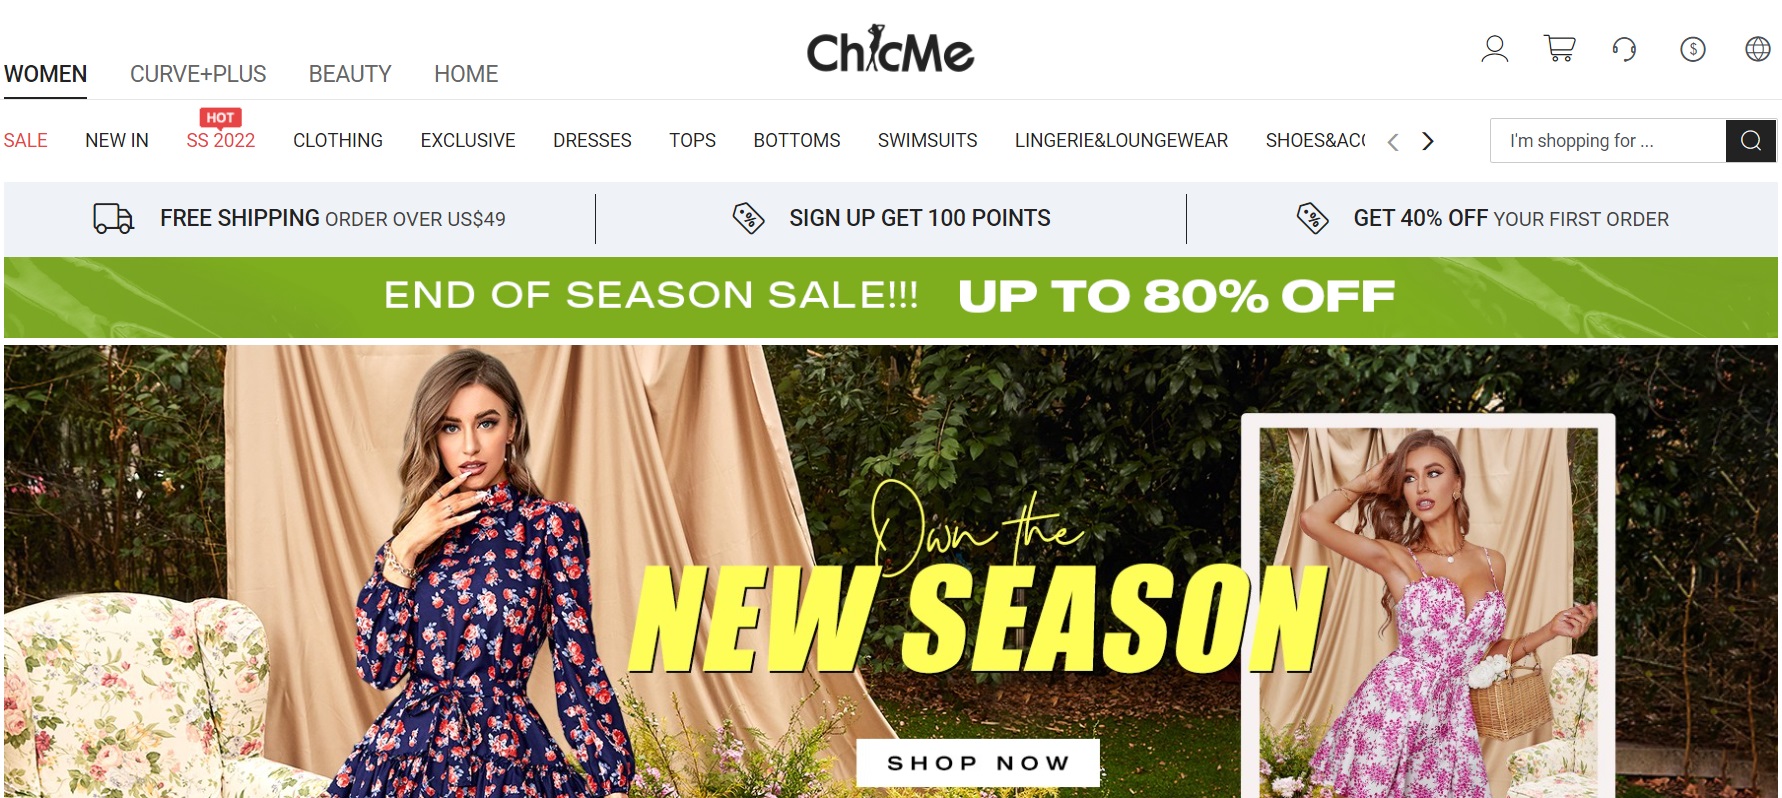 ChicMe официальный сайт интернет-магазина